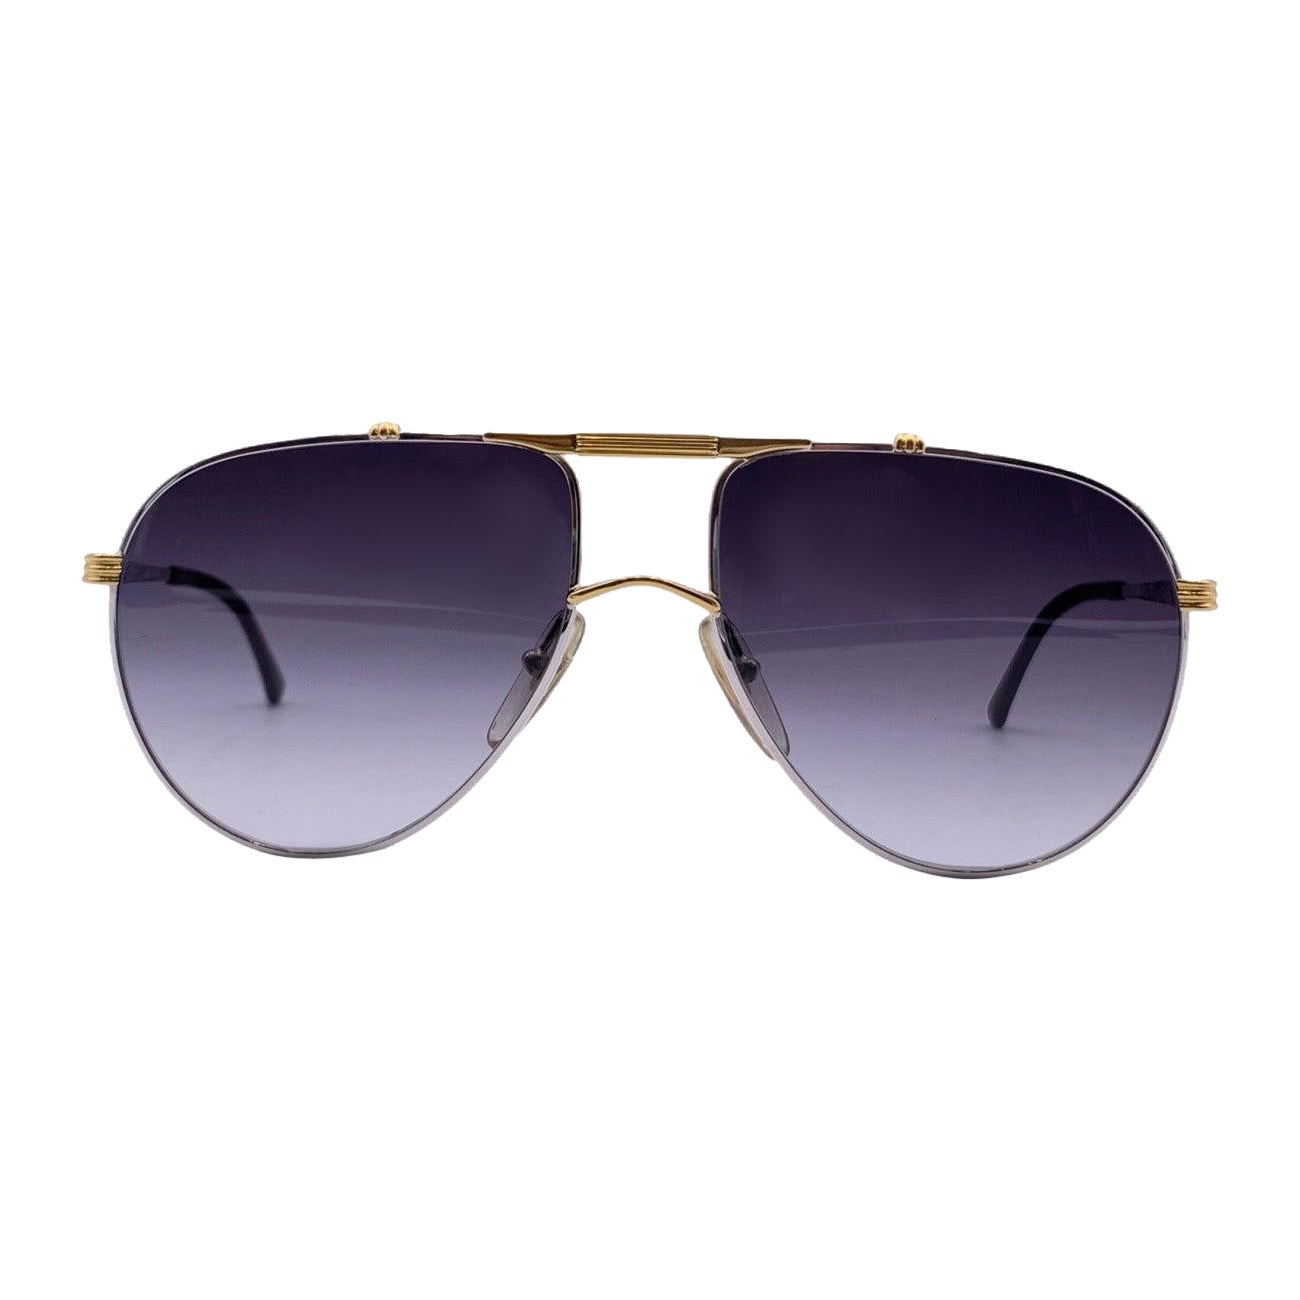 Christian Dior Monsieur Vintage Sunglasses 2248 74 58/17 130mm For Sale